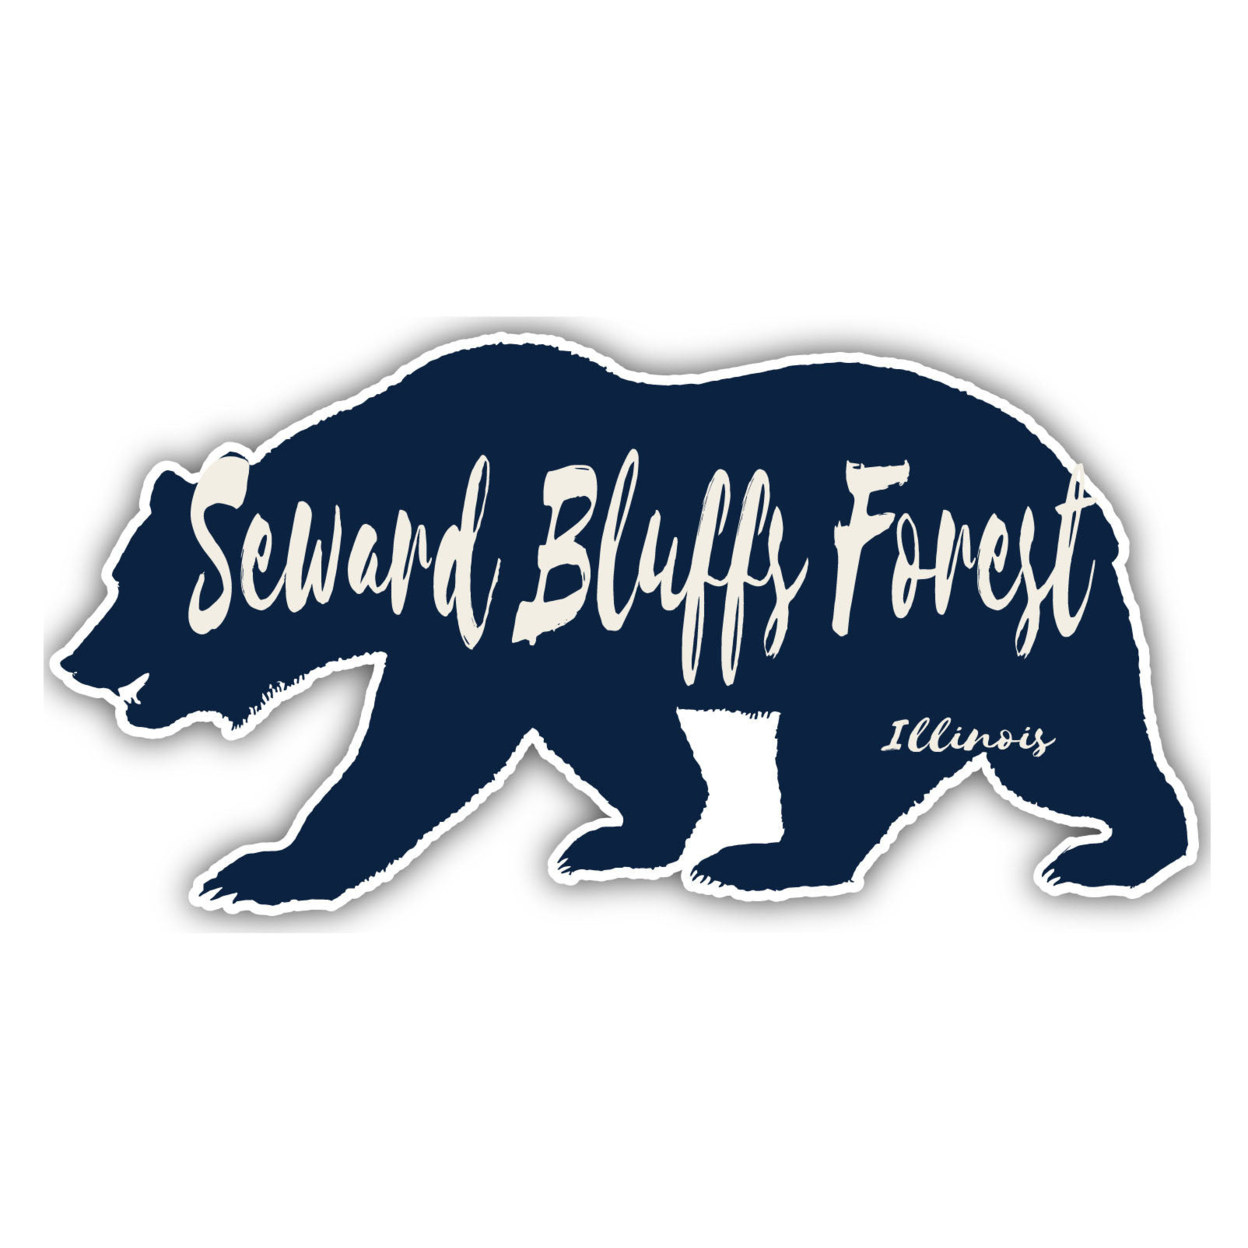 Seward Bluffs Forest Illinois Souvenir Decorative Stickers (Choose Theme And Size) - Single Unit, 4-Inch, Bear